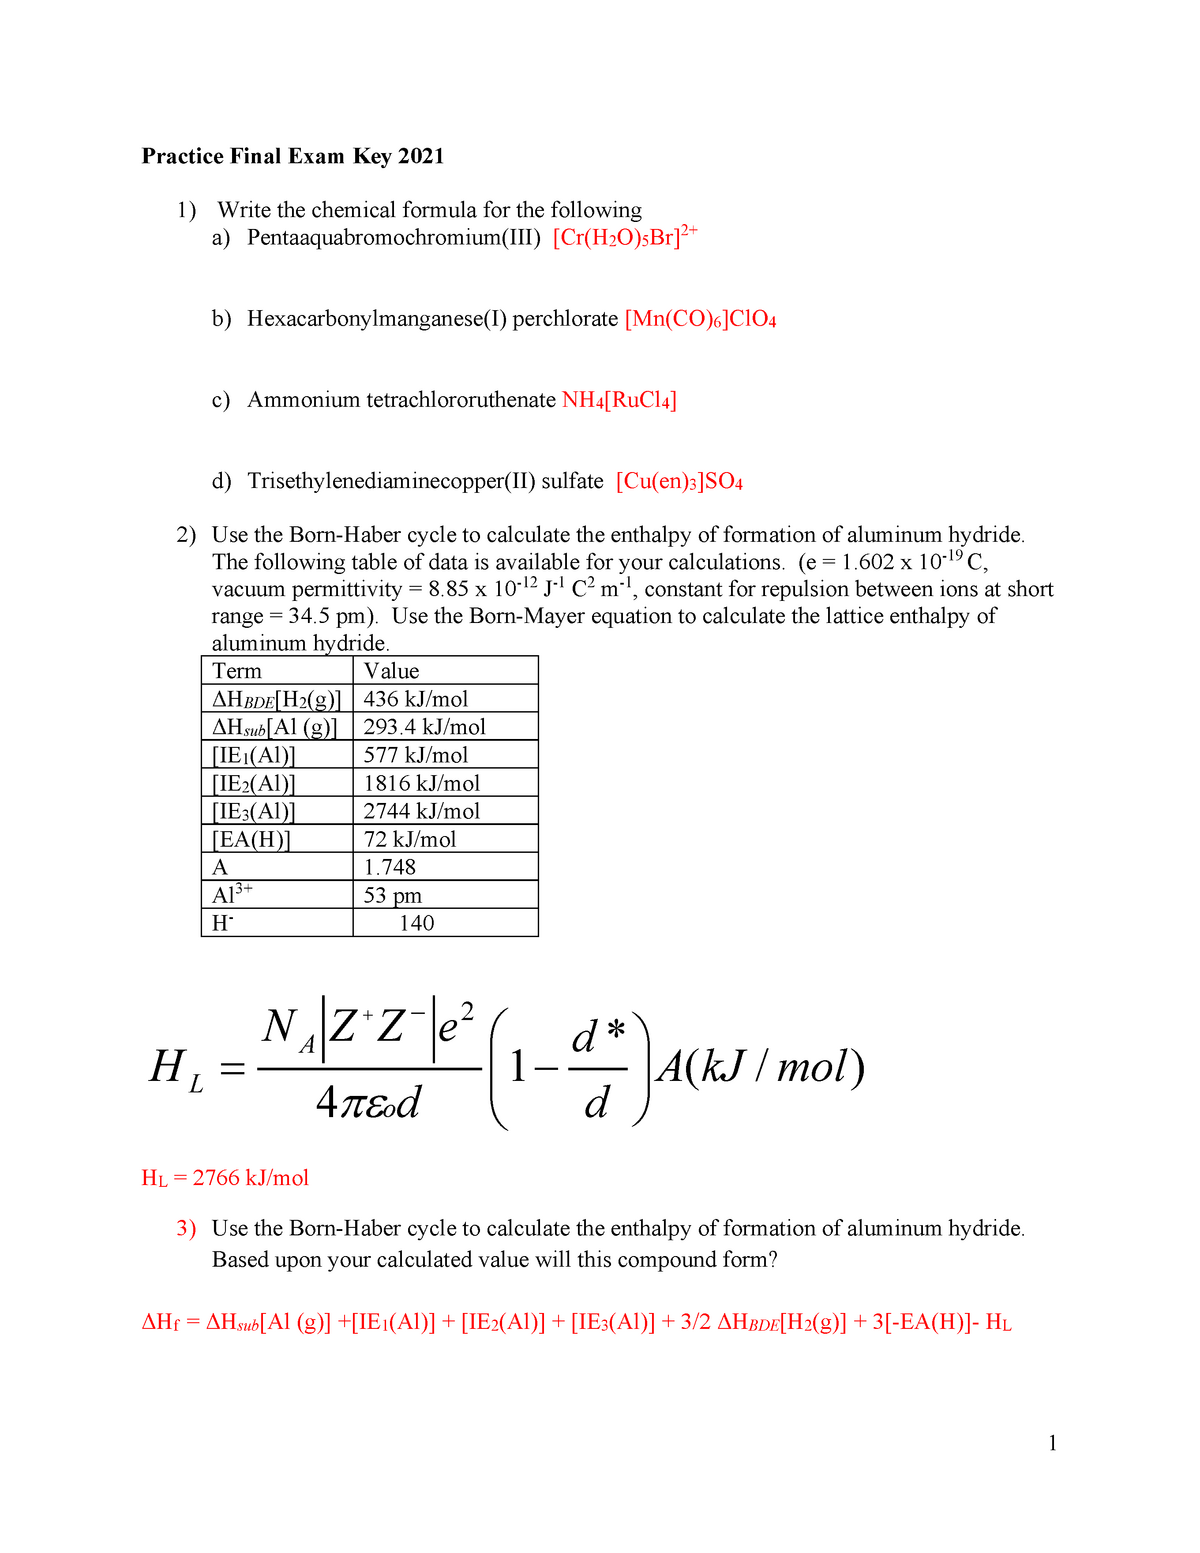 practice-exam-final-answer-key-2021-inorganic-chemistry-practice